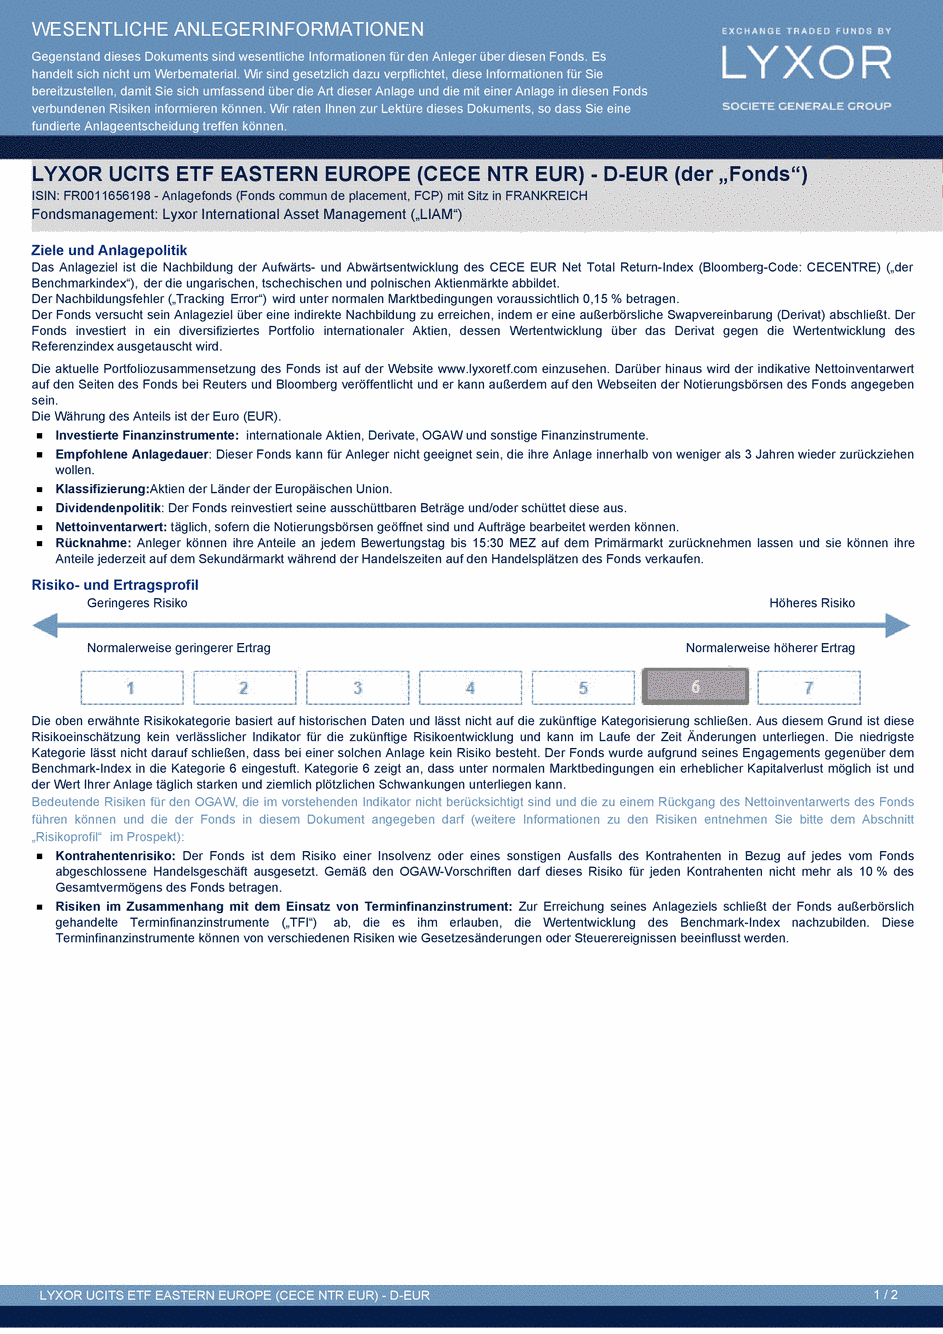 DICI LYXOR EASTERN EUROPE (CECE NTR EUR) UCITS ETF D-EUR - 17/10/2014 - Allemand